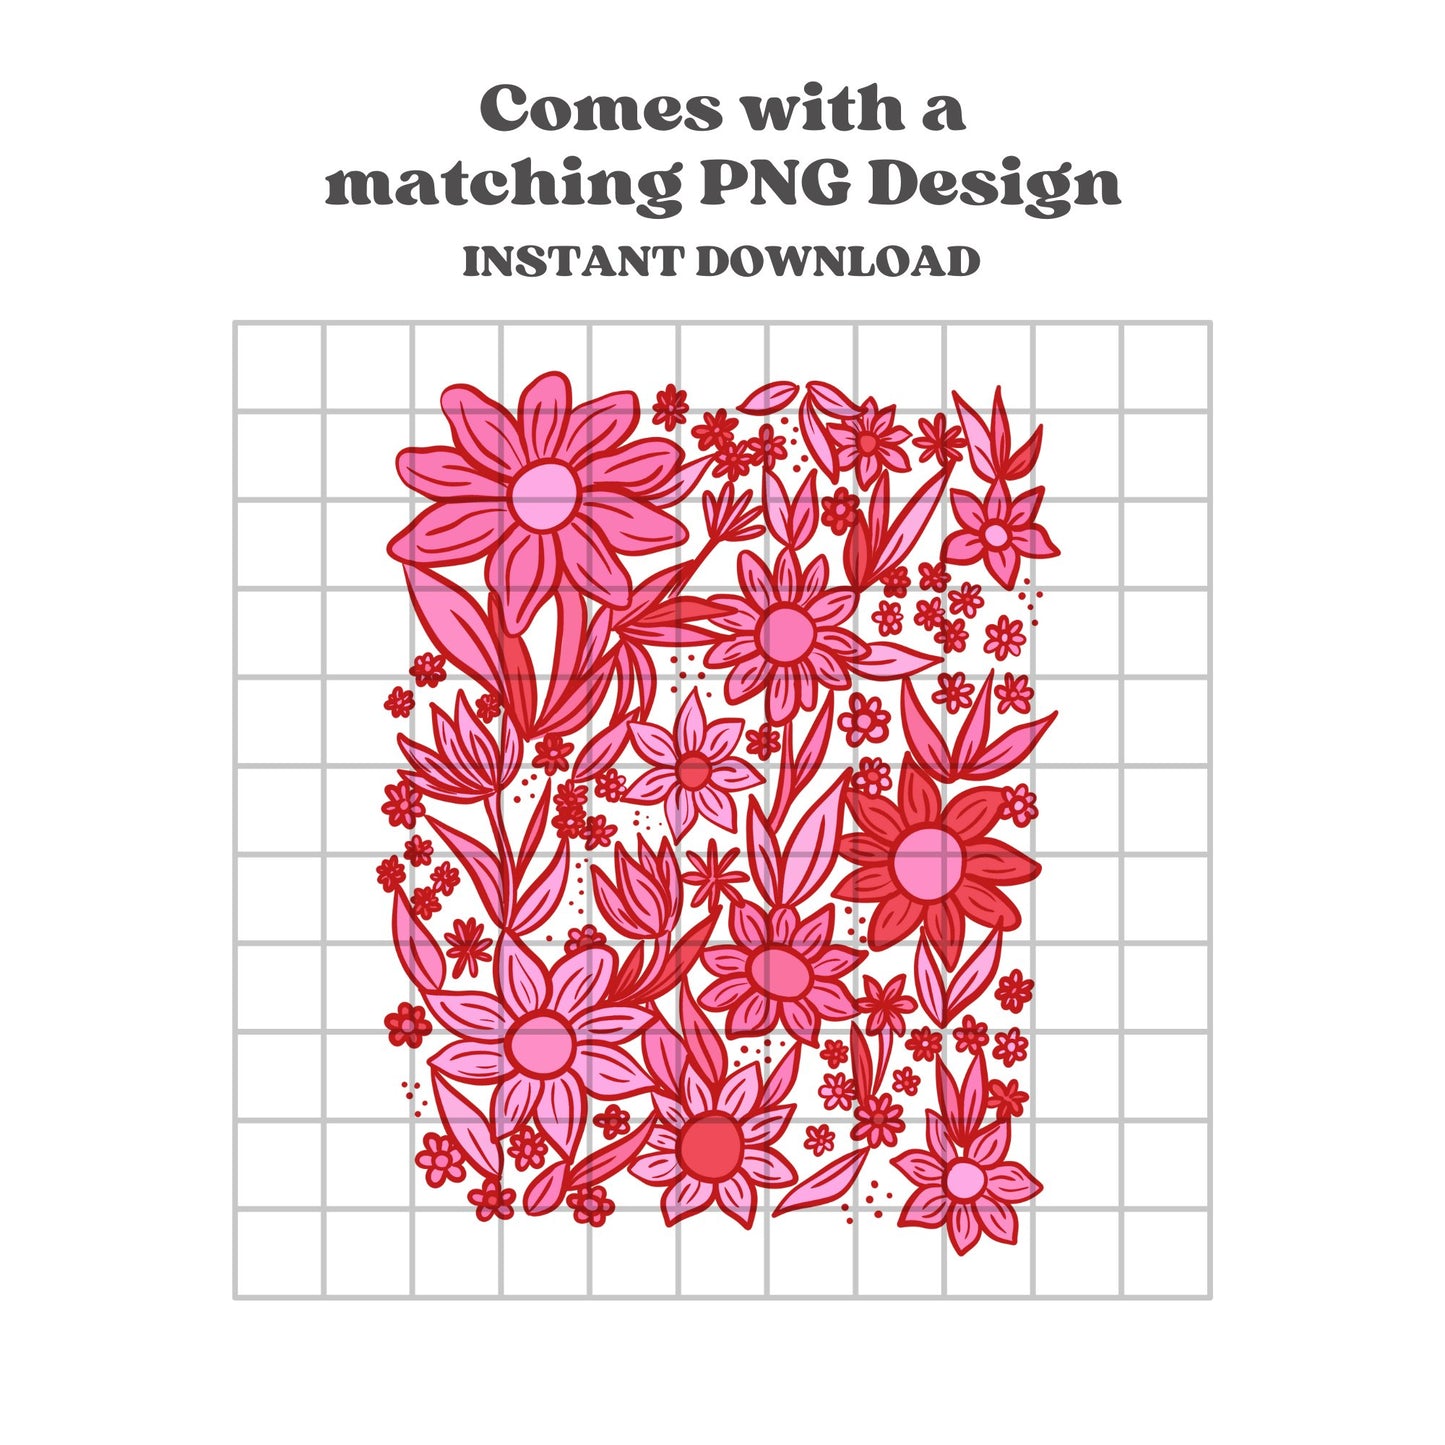 Boho Dainty Floral Pattern Design - SkyyDesignsCo | Seamless Pattern Designs